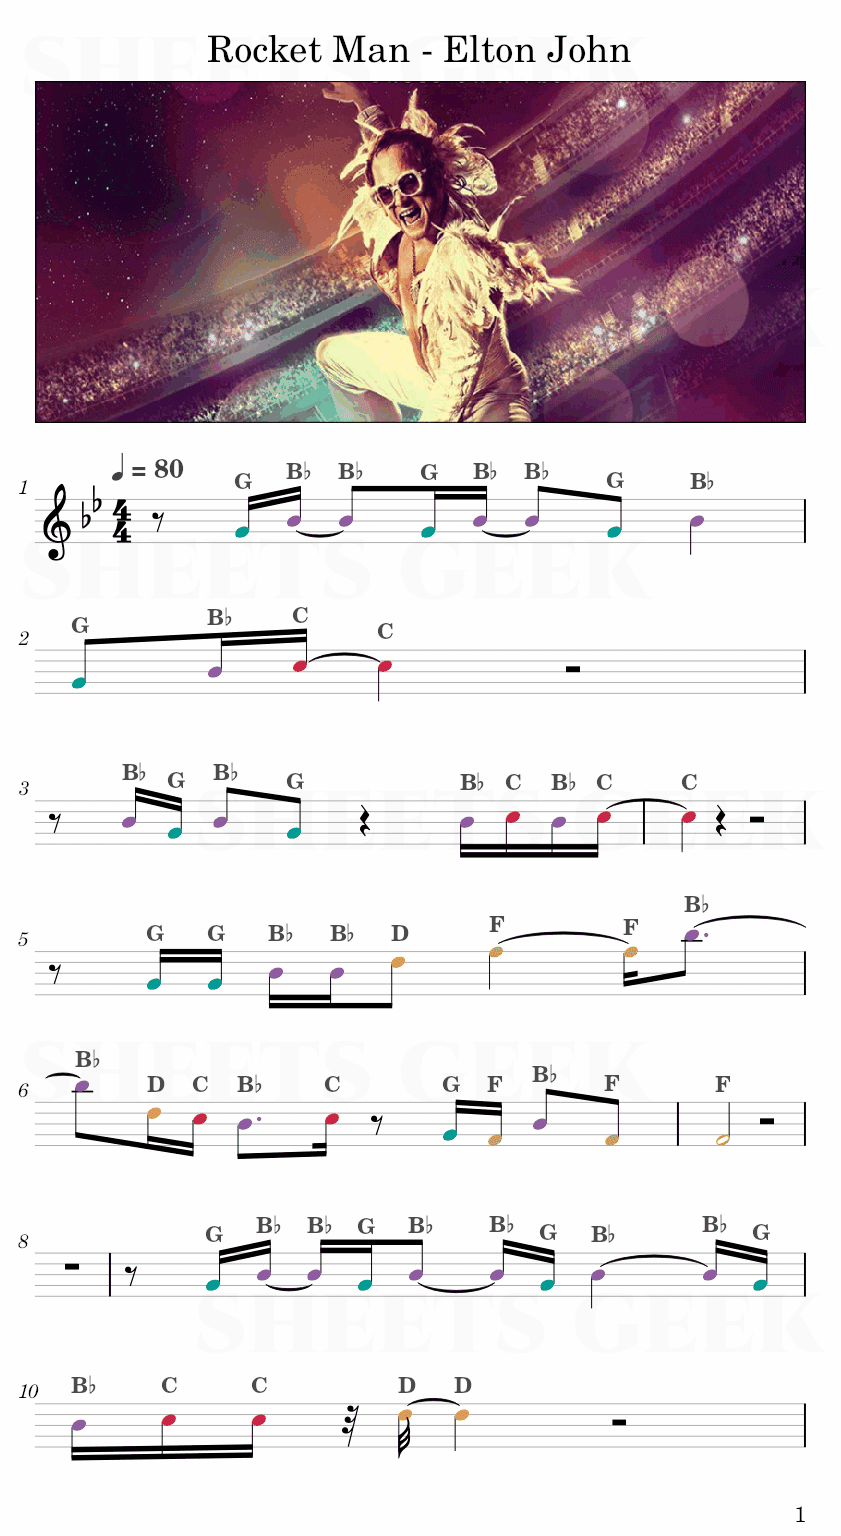 Rocket Man - Elton John Easy Sheet Music Free for piano, keyboard, flute, violin, sax, cello page 1